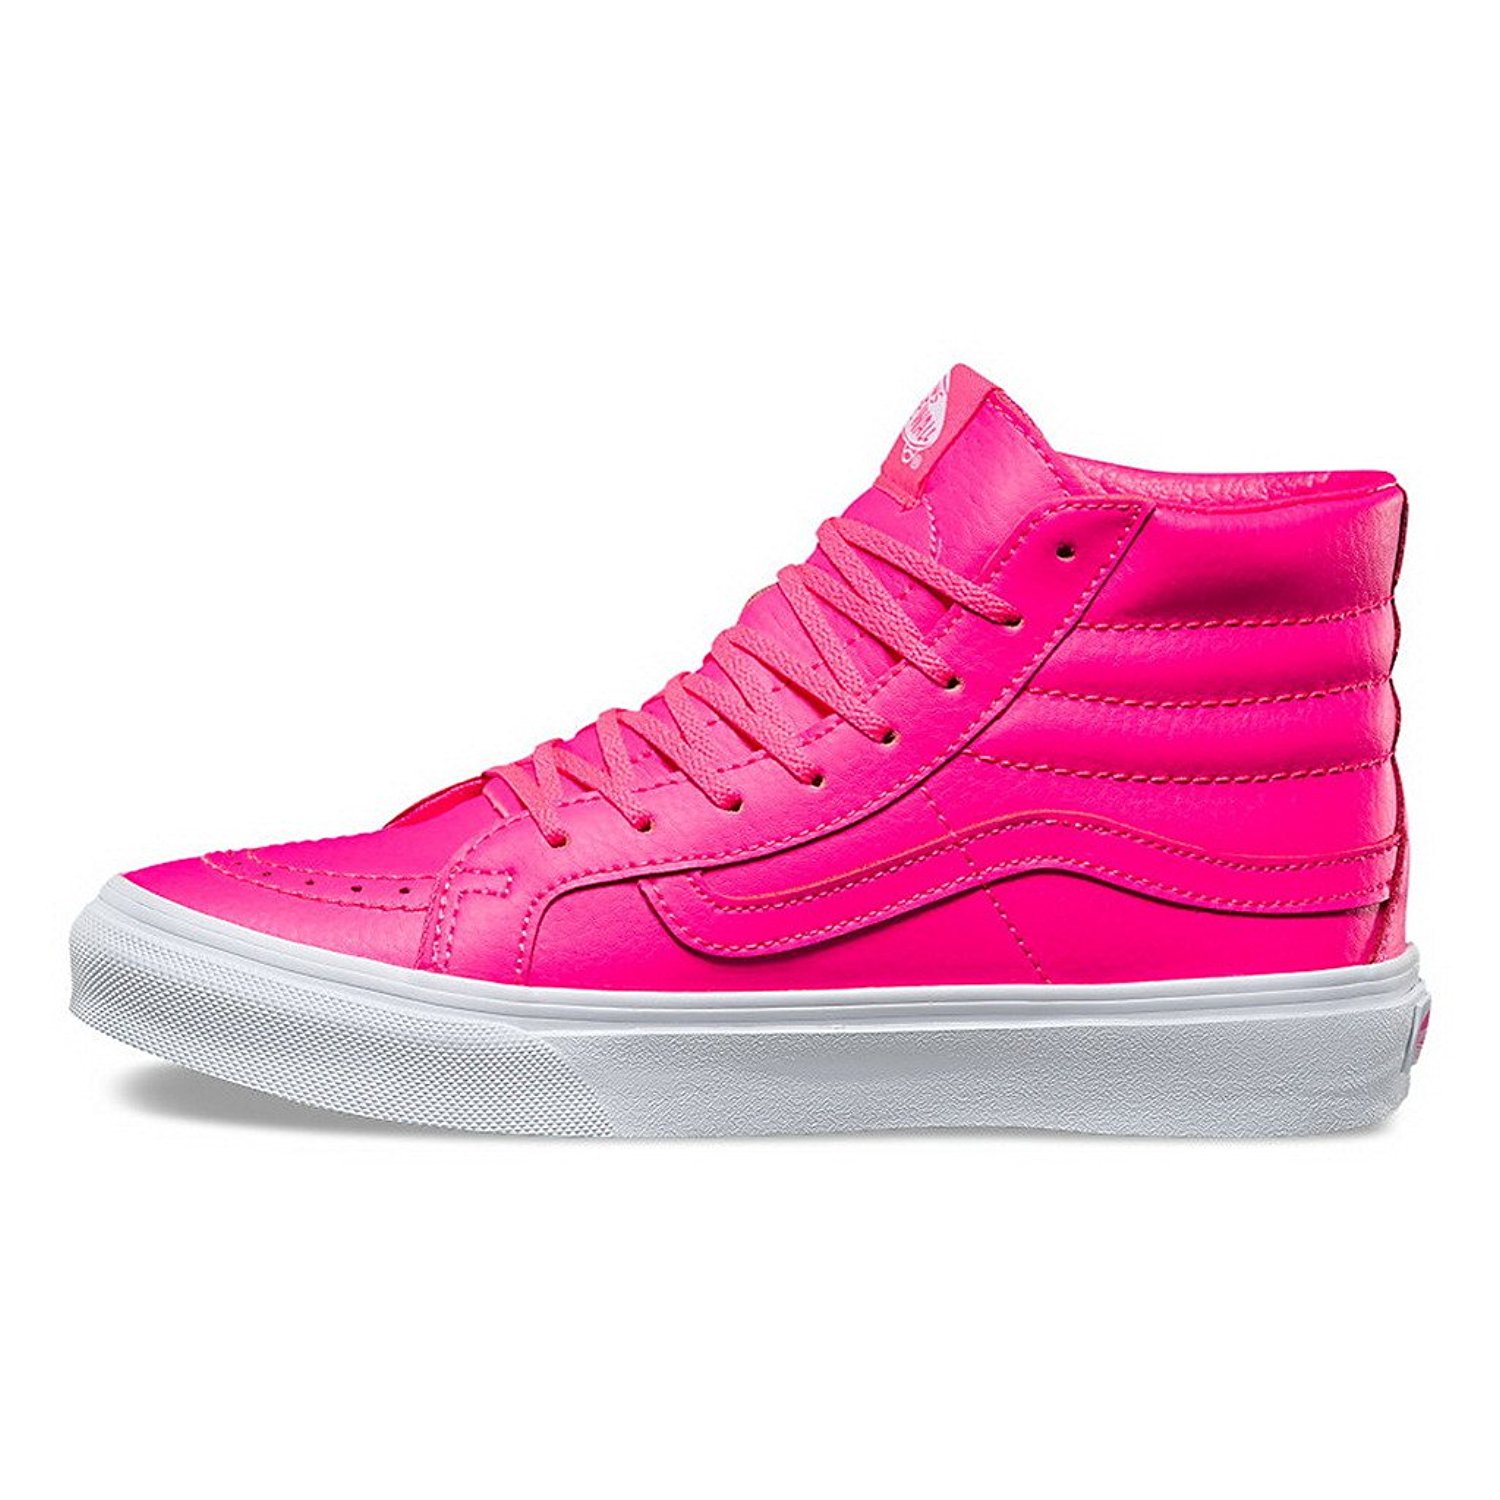 Vans Sk8-Hi Slim Neon Leather Pink High-Top Skateboarding Shoe - 7M / 5.5M - image 4 of 4